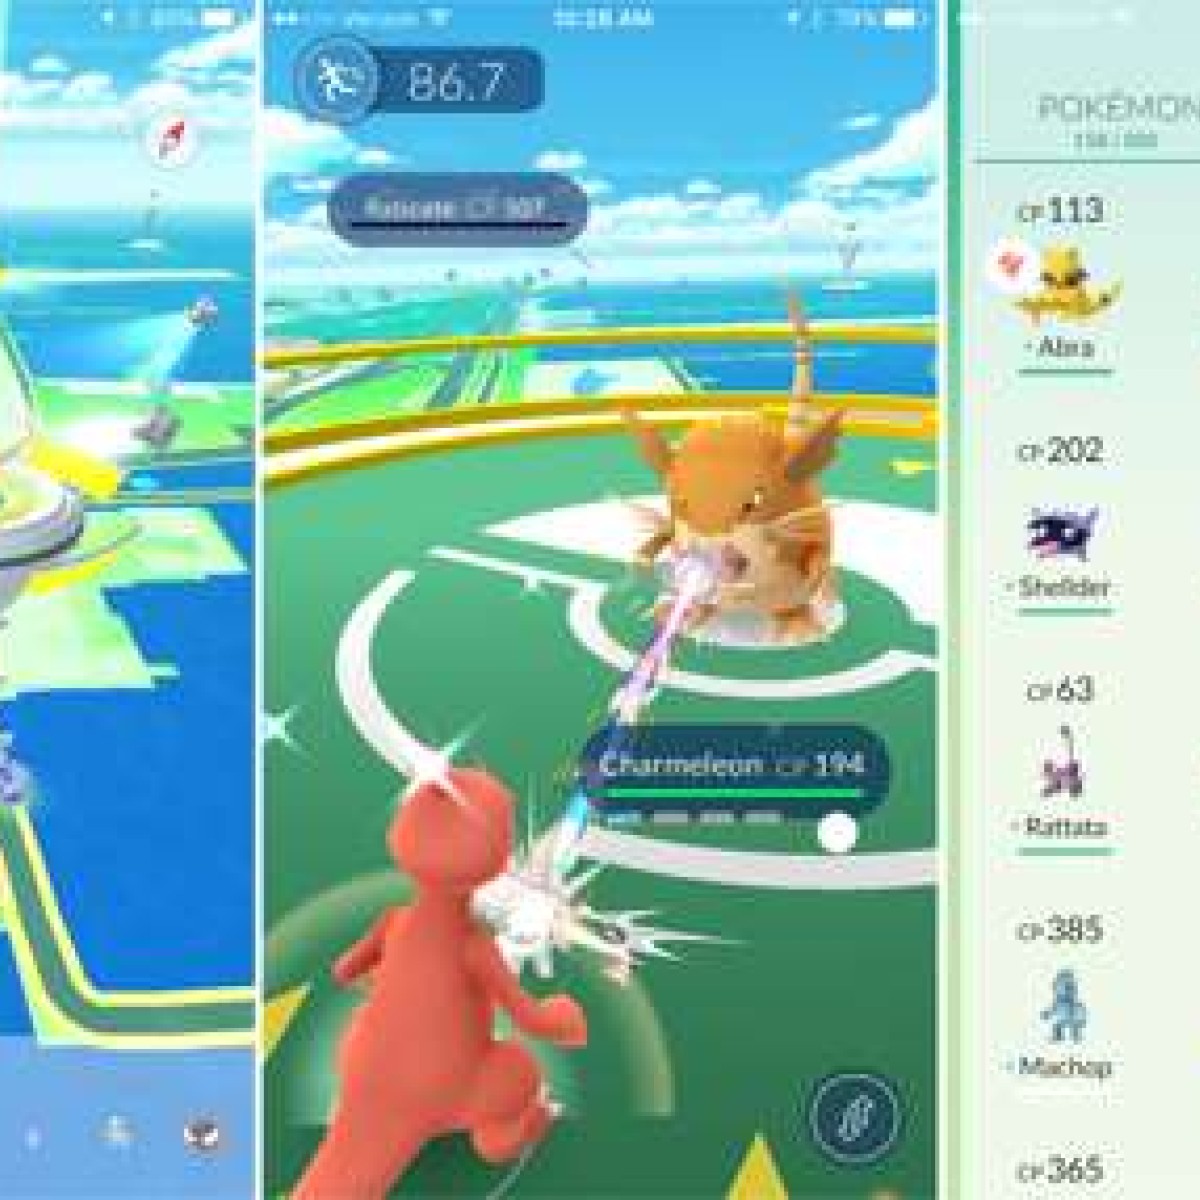 Pokémon GO Arrives in France and Hong Kong